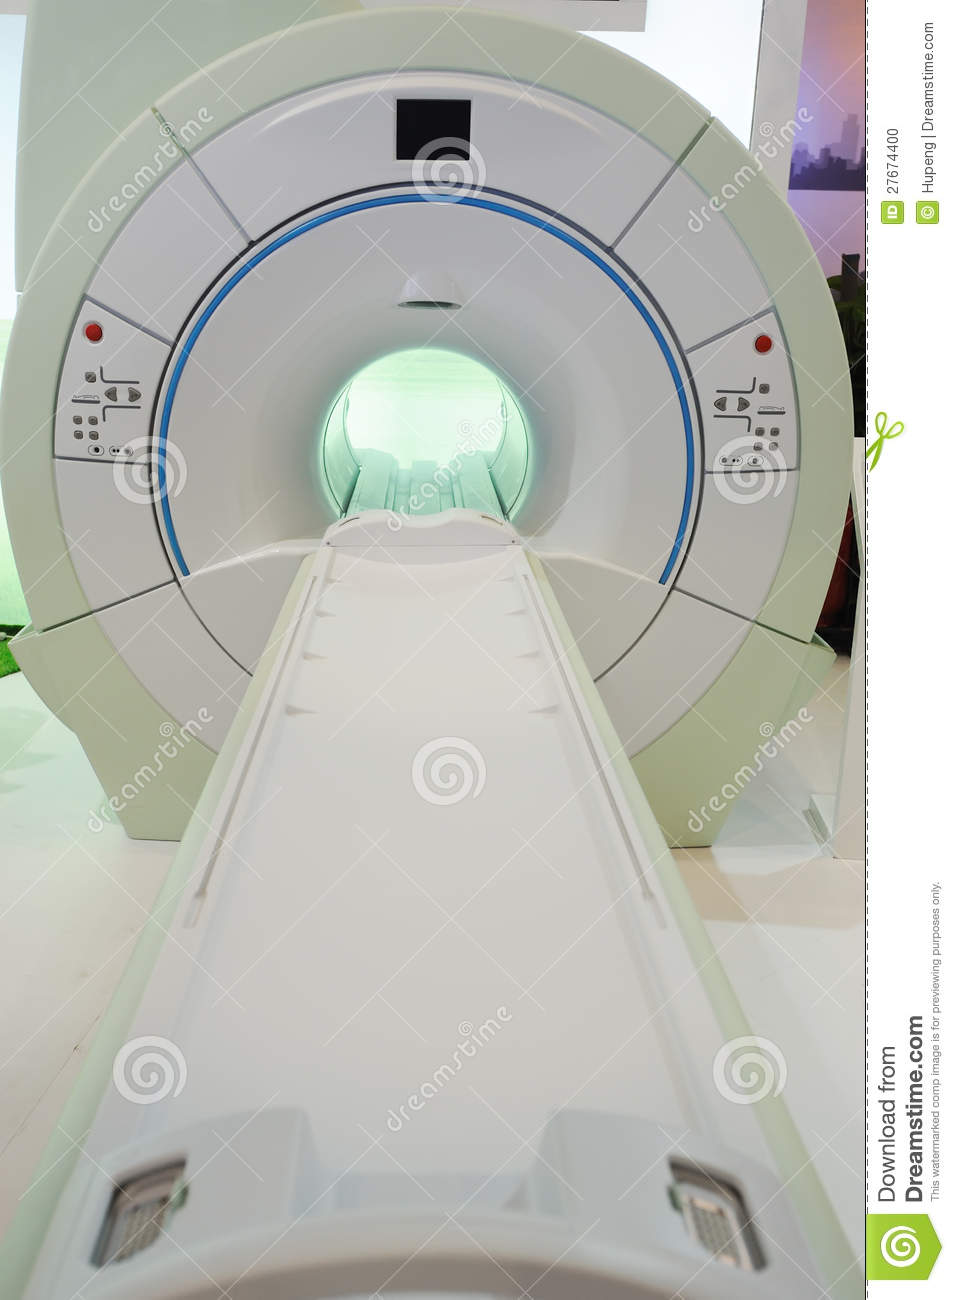 magnetic resonance imaging technologists